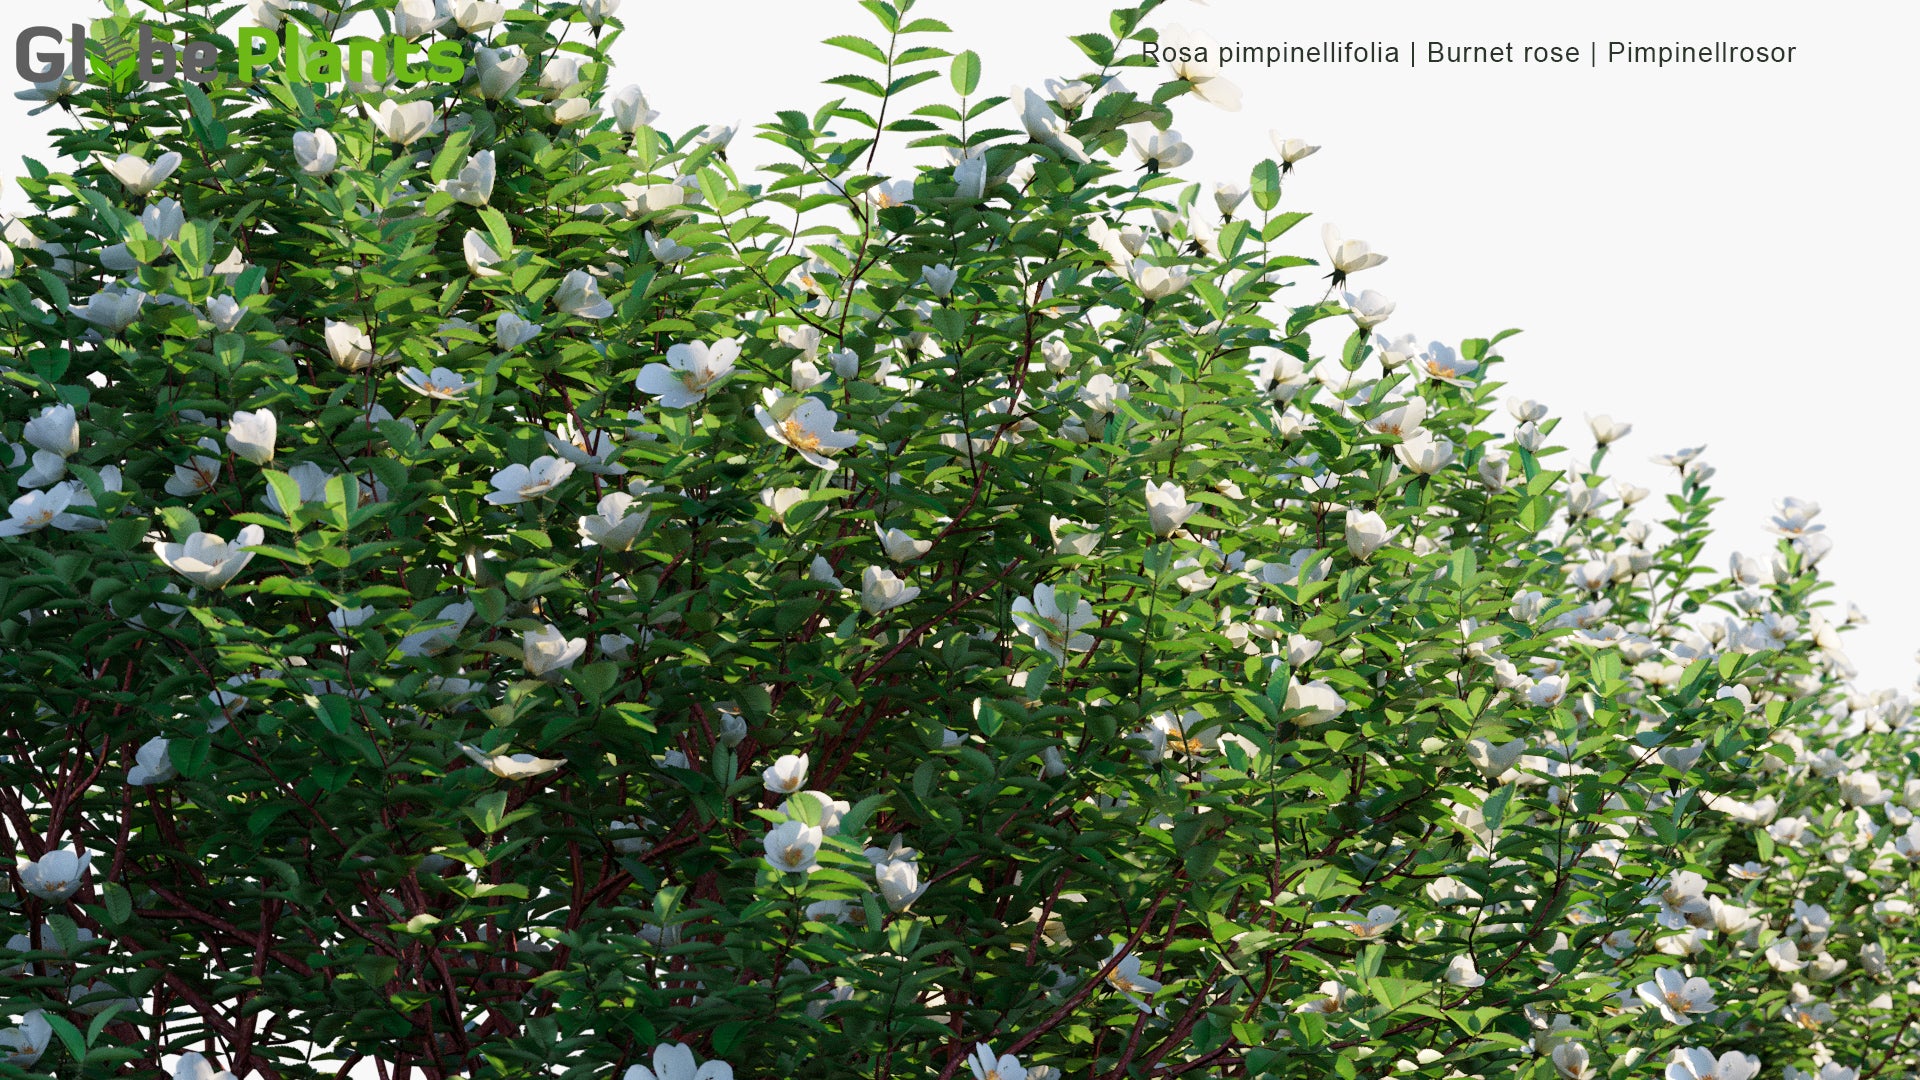 Rosa Pimpinellifolia - Burnet Rose, Pimpinellrosor